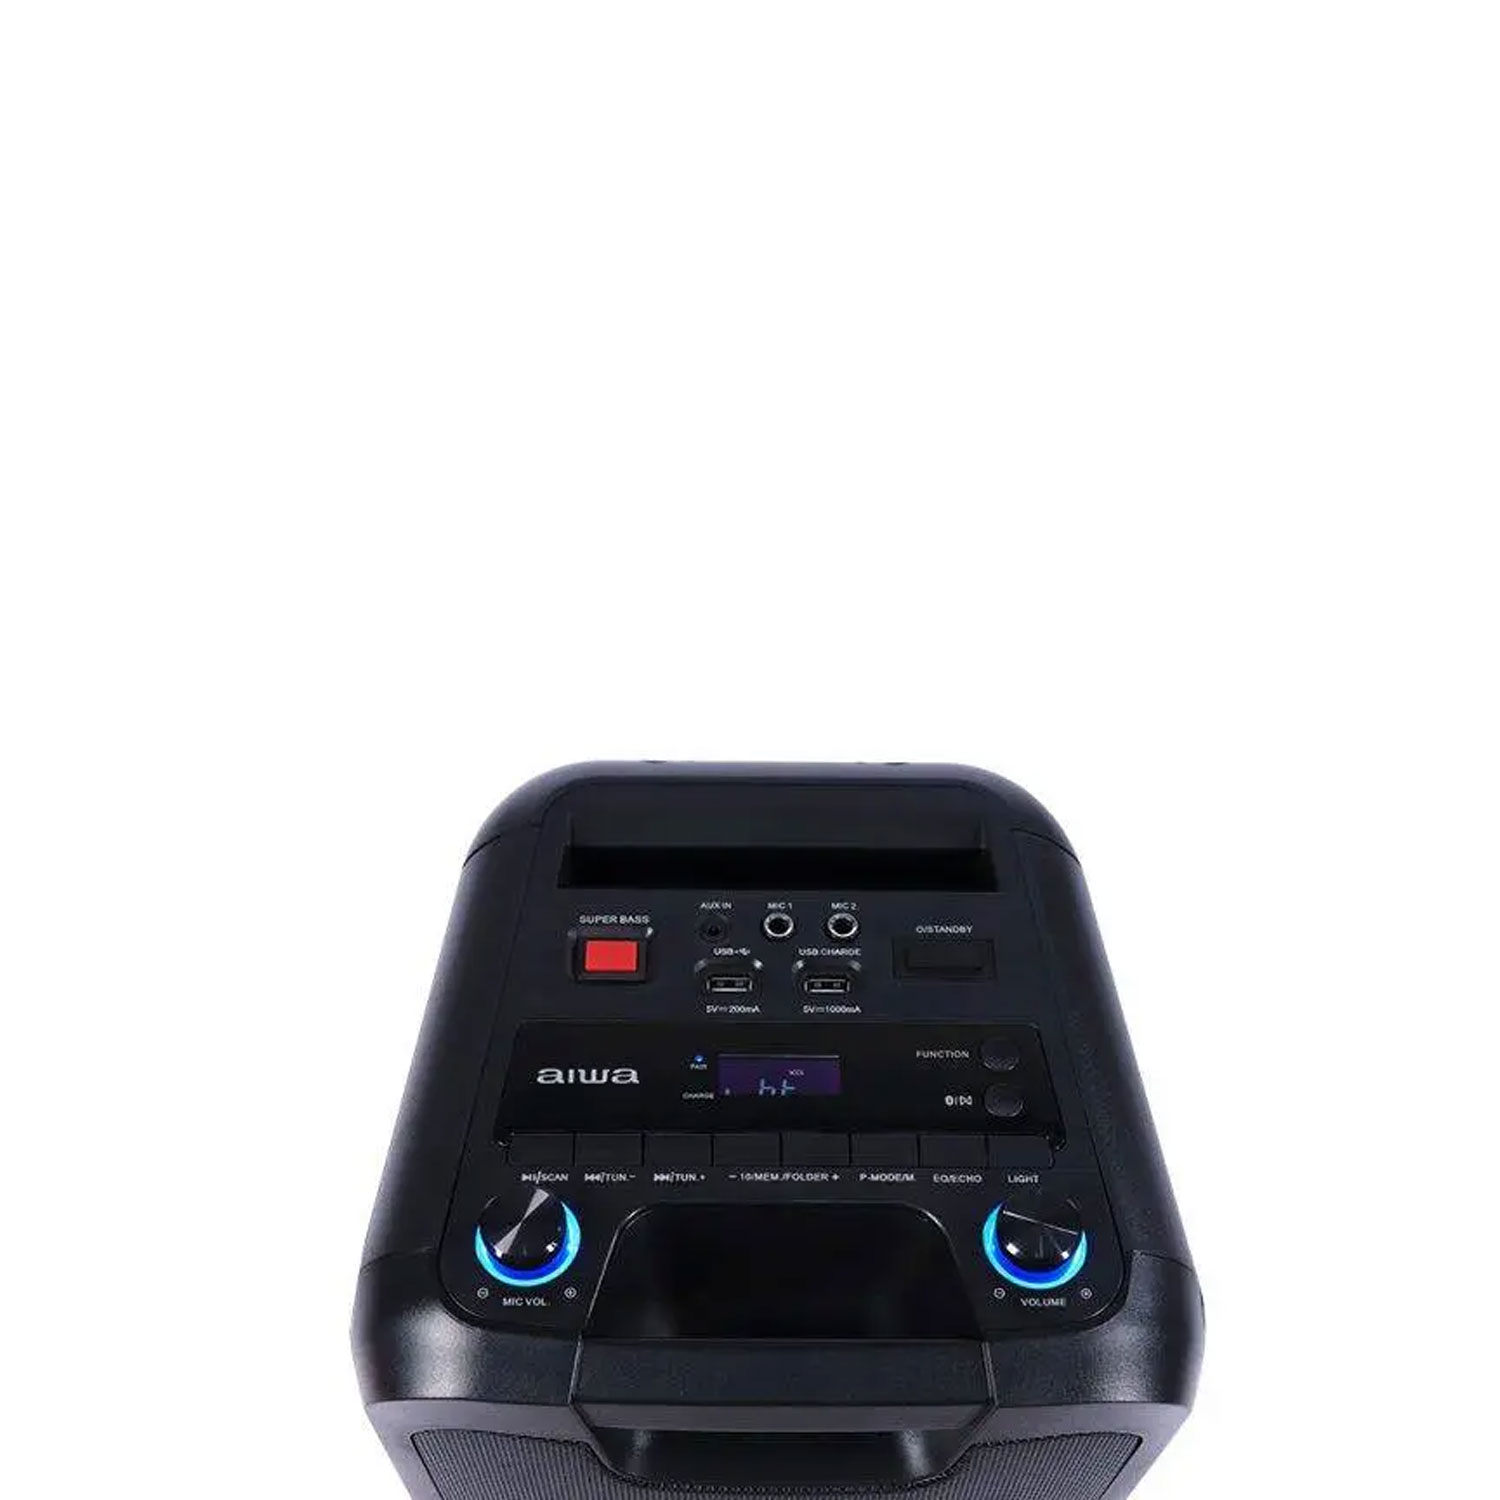 Caixa de Som Karaoke Aiwa AW-POK6LD Bluetooth / USB / Auxiliar / com Microfone -  Preto